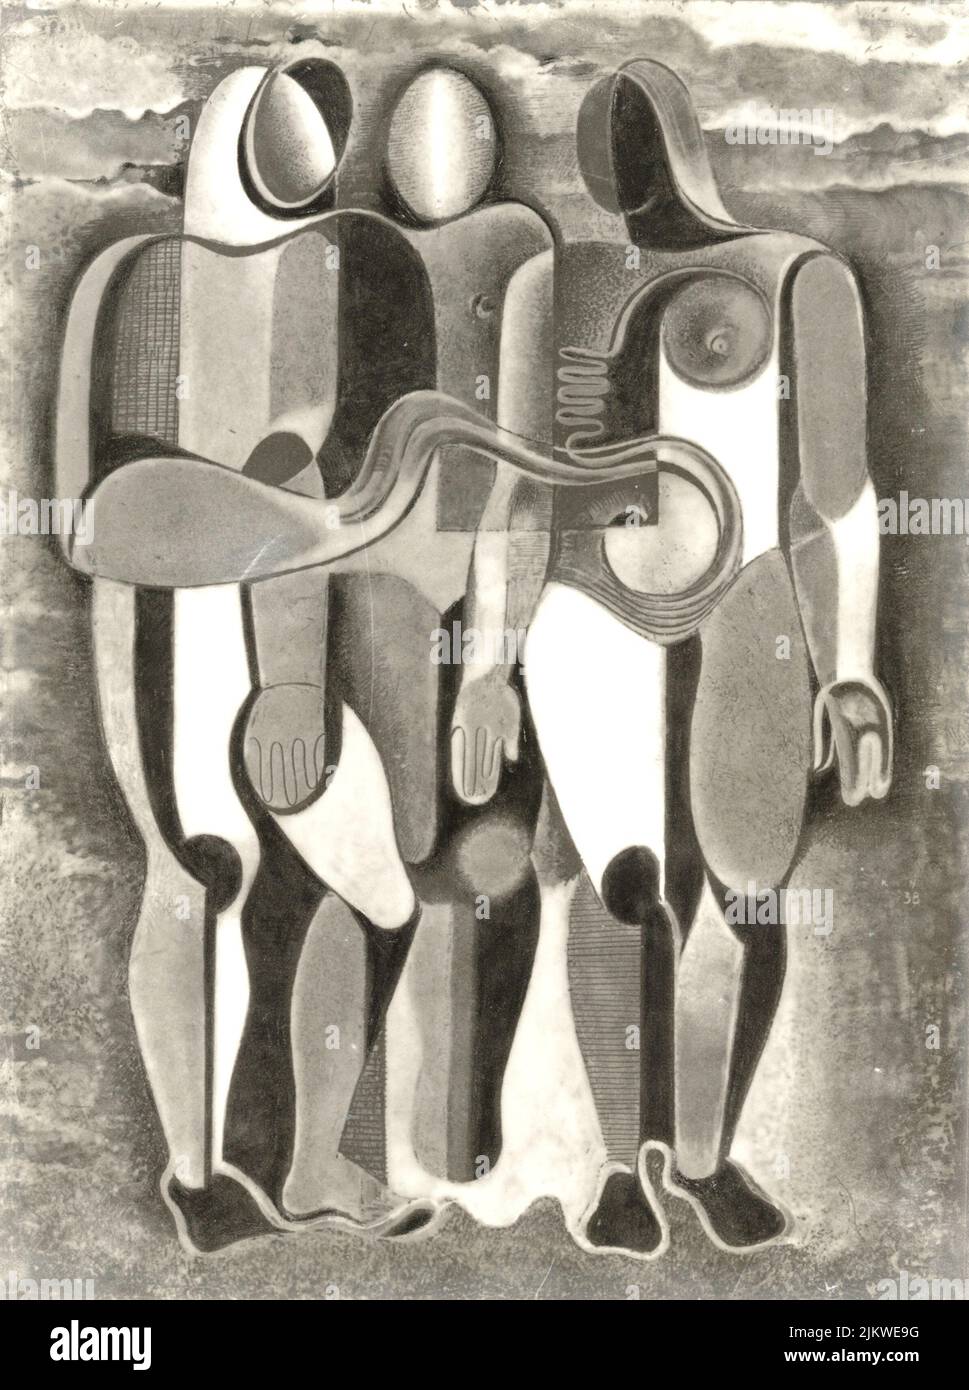 Karol Hiller - composizione eliografica - 1938 Foto Stock